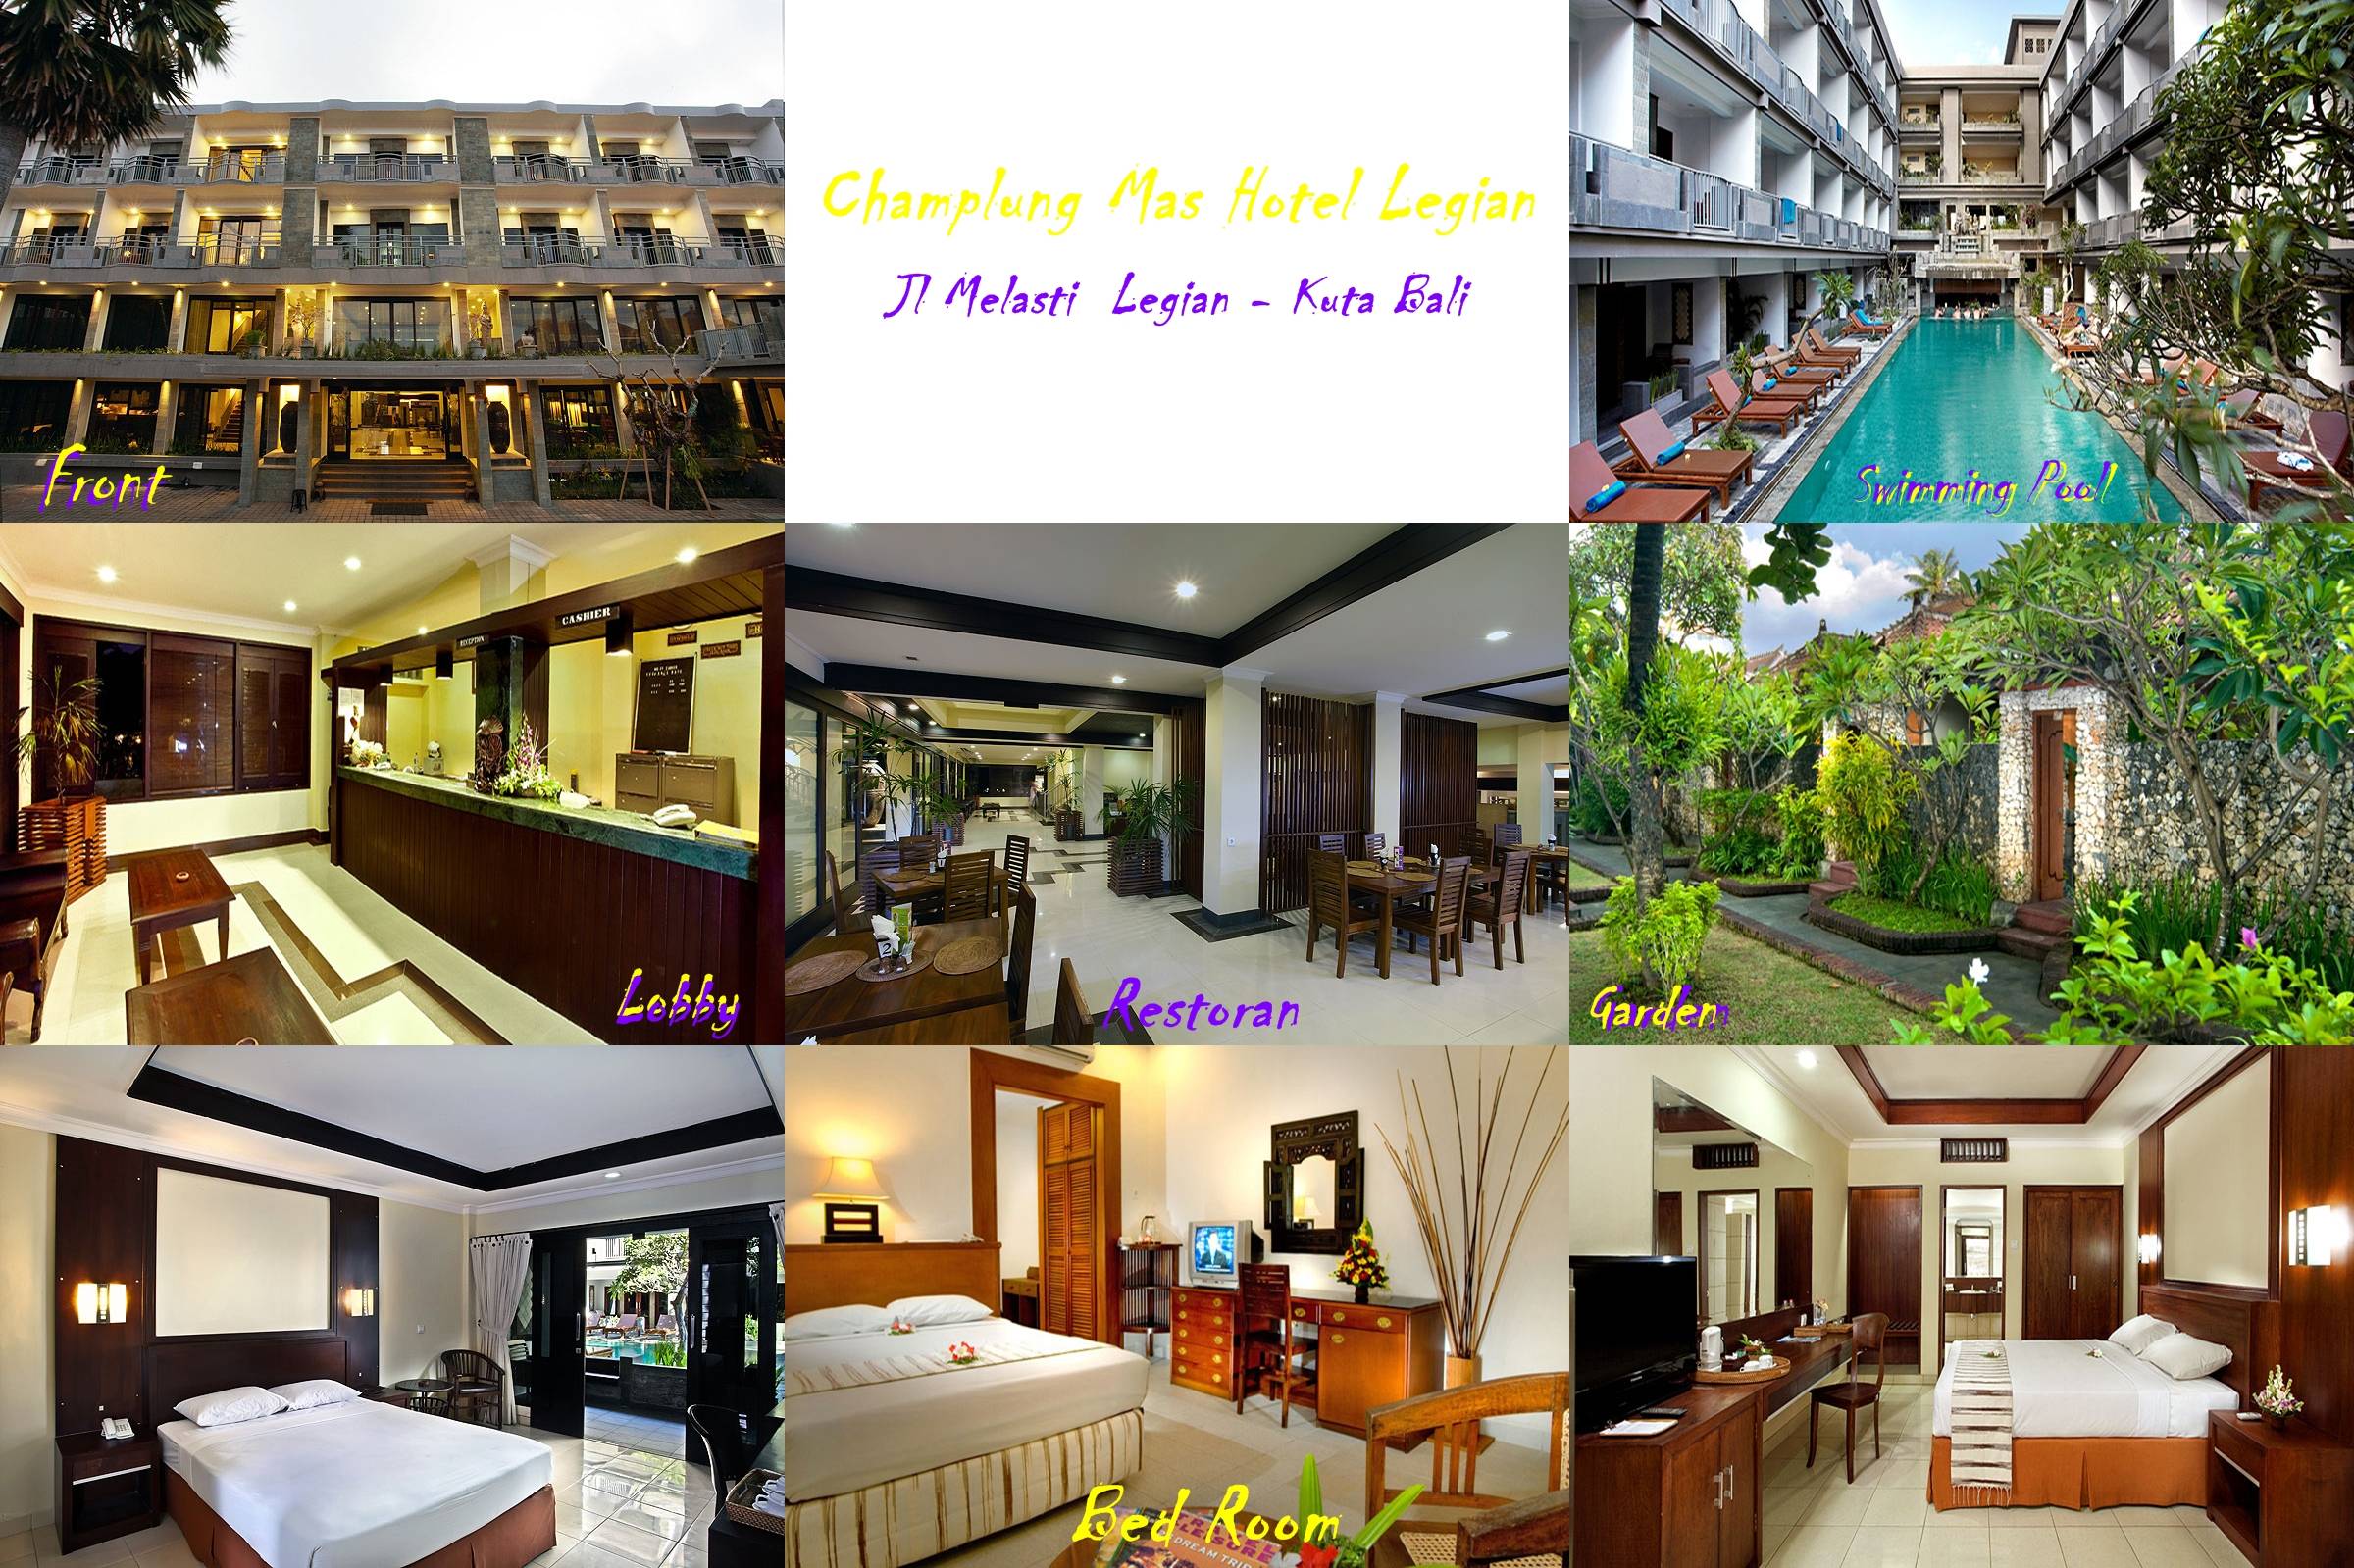 Champlung mas hotel legian - chse certified